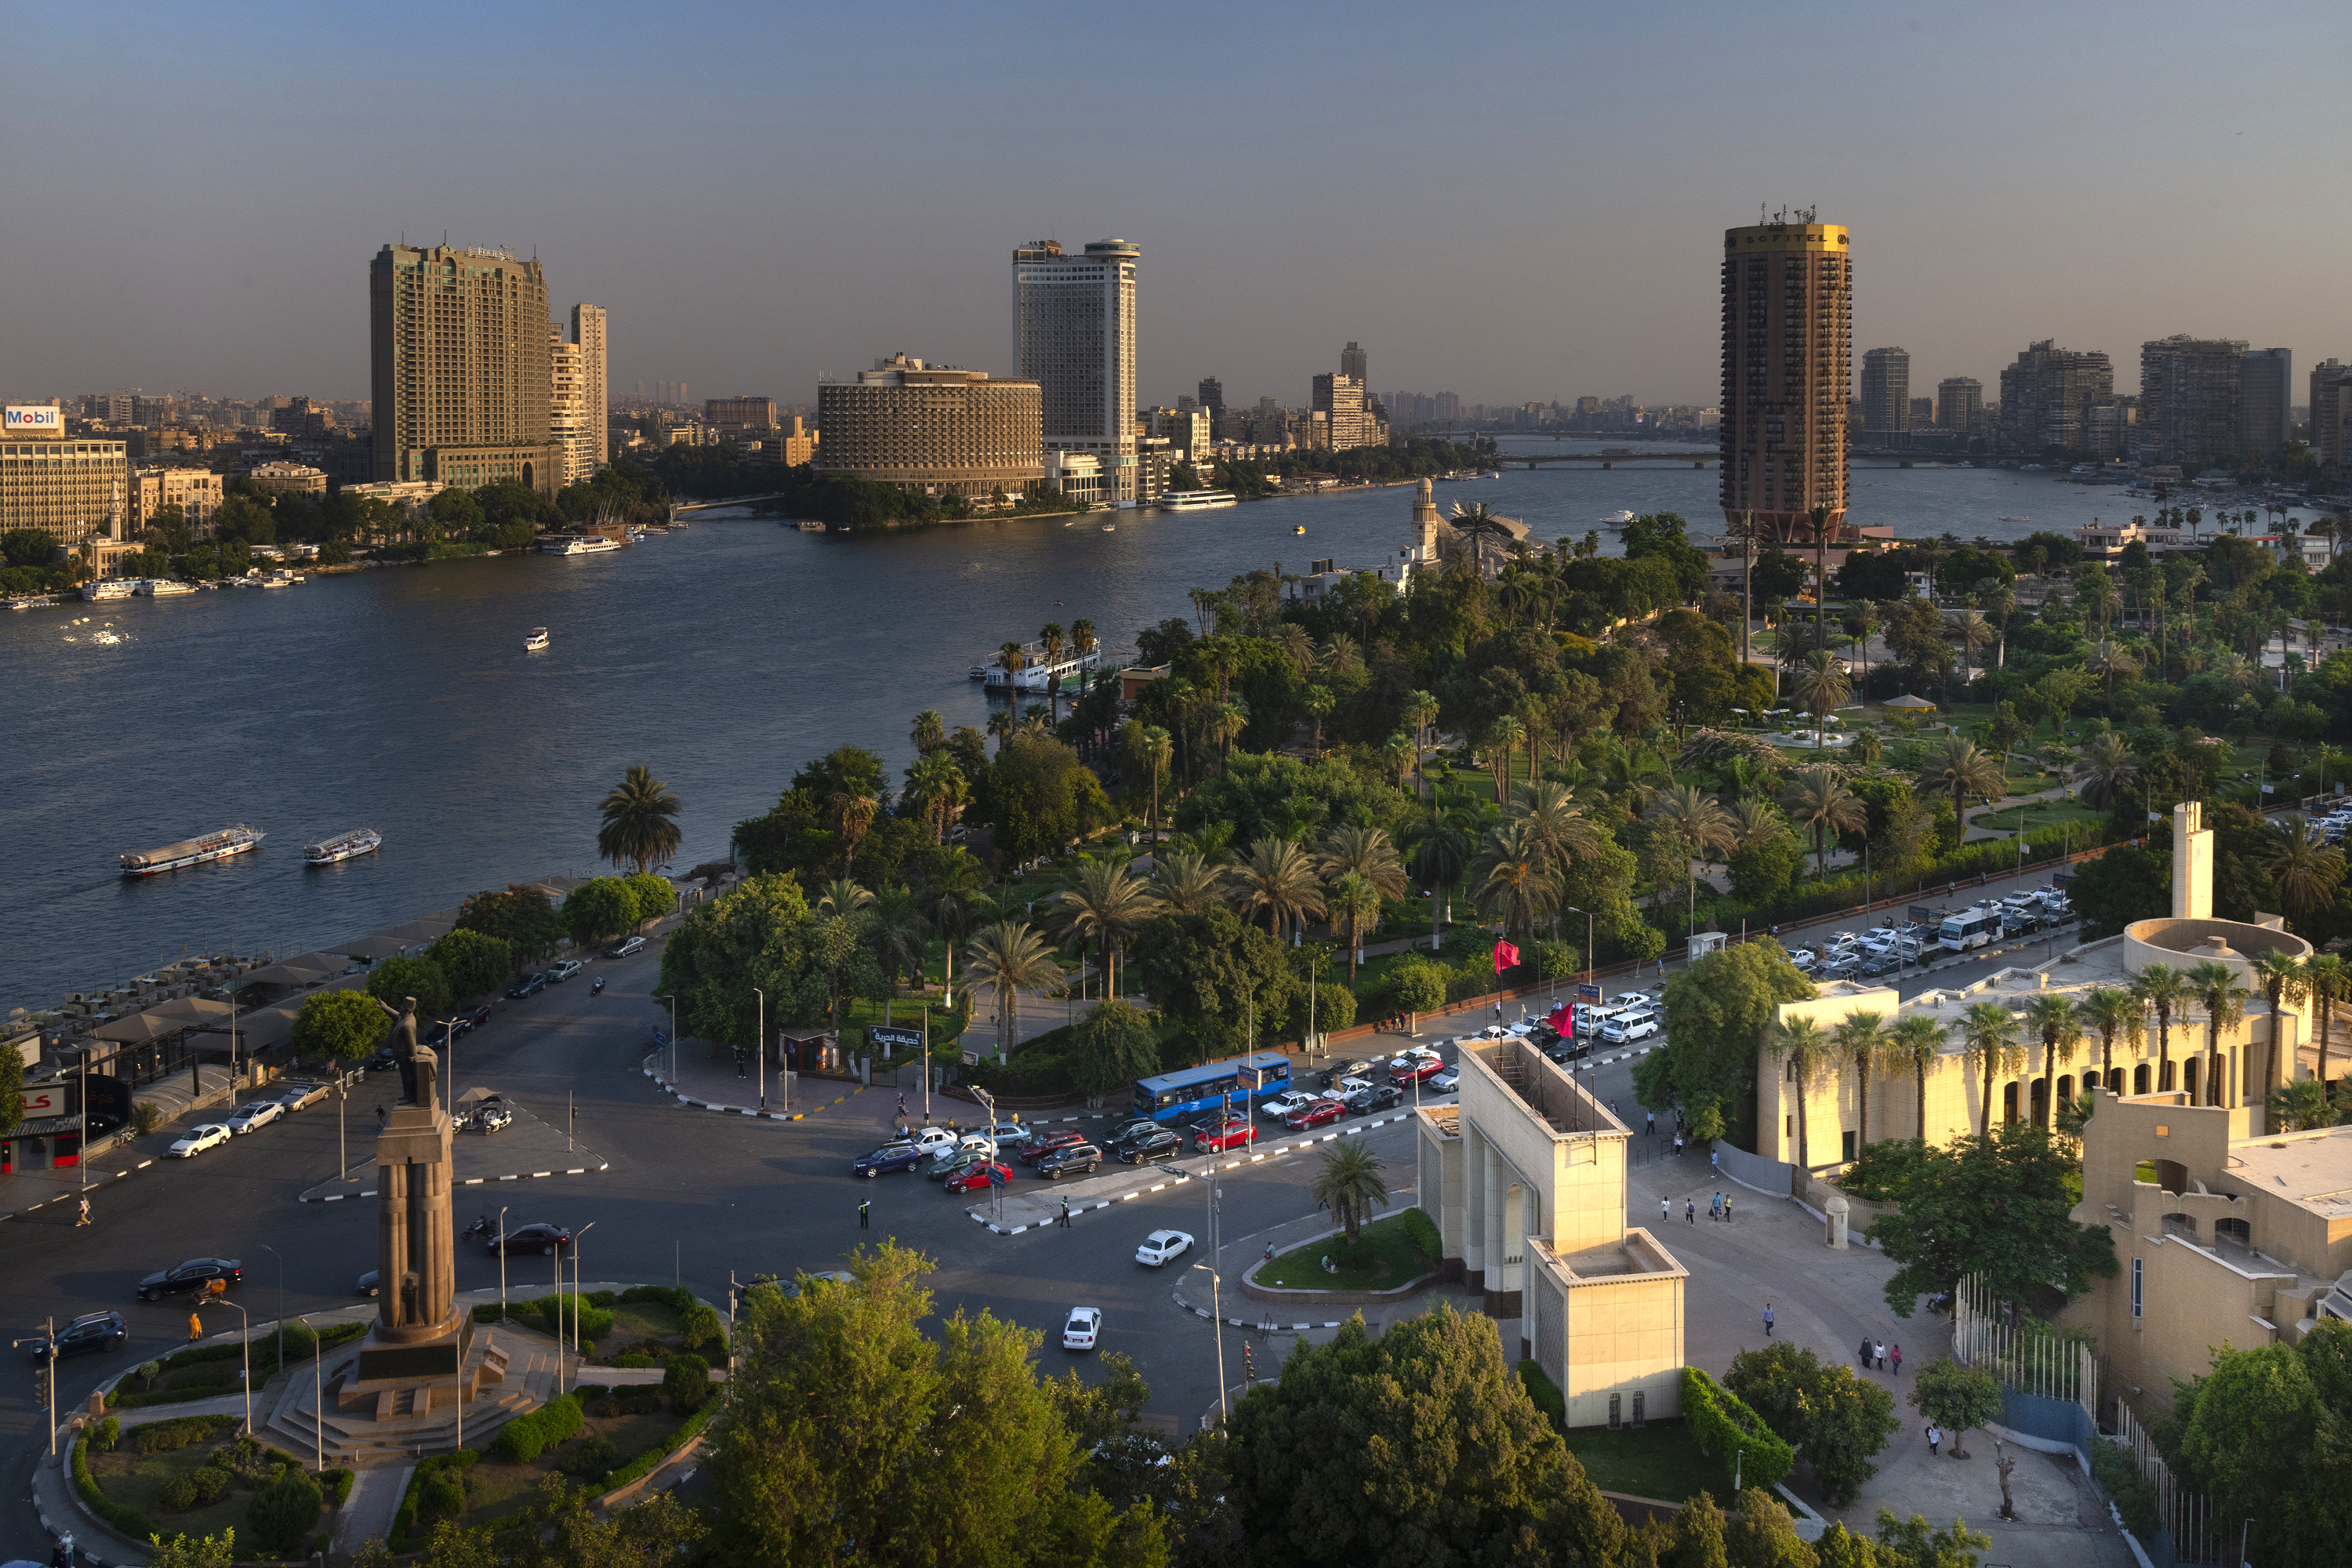 View of Cairo from Zamalek, Egypt. Photo by Scott Bennett